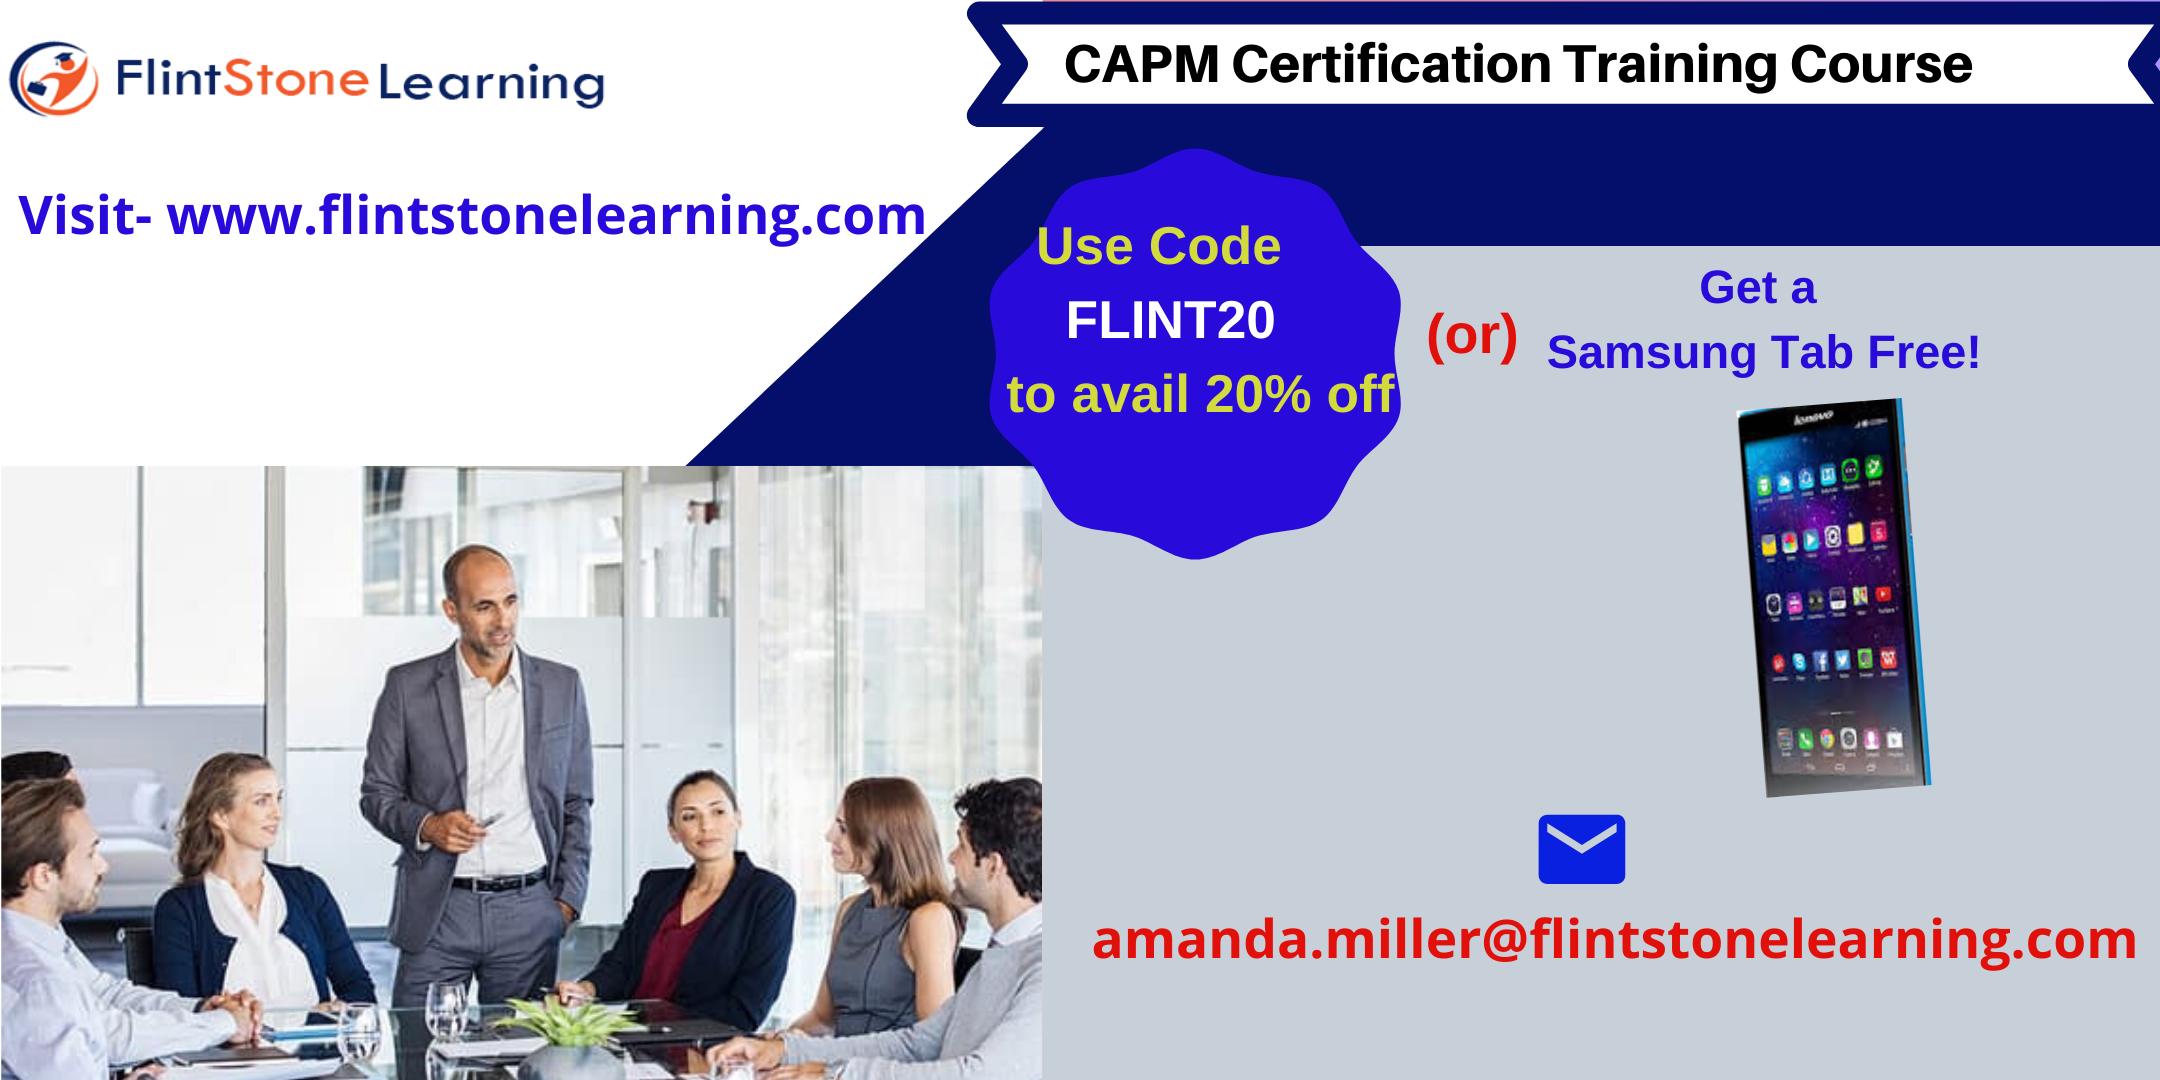 CAPM Certification Training Course in Corte Madera, CA